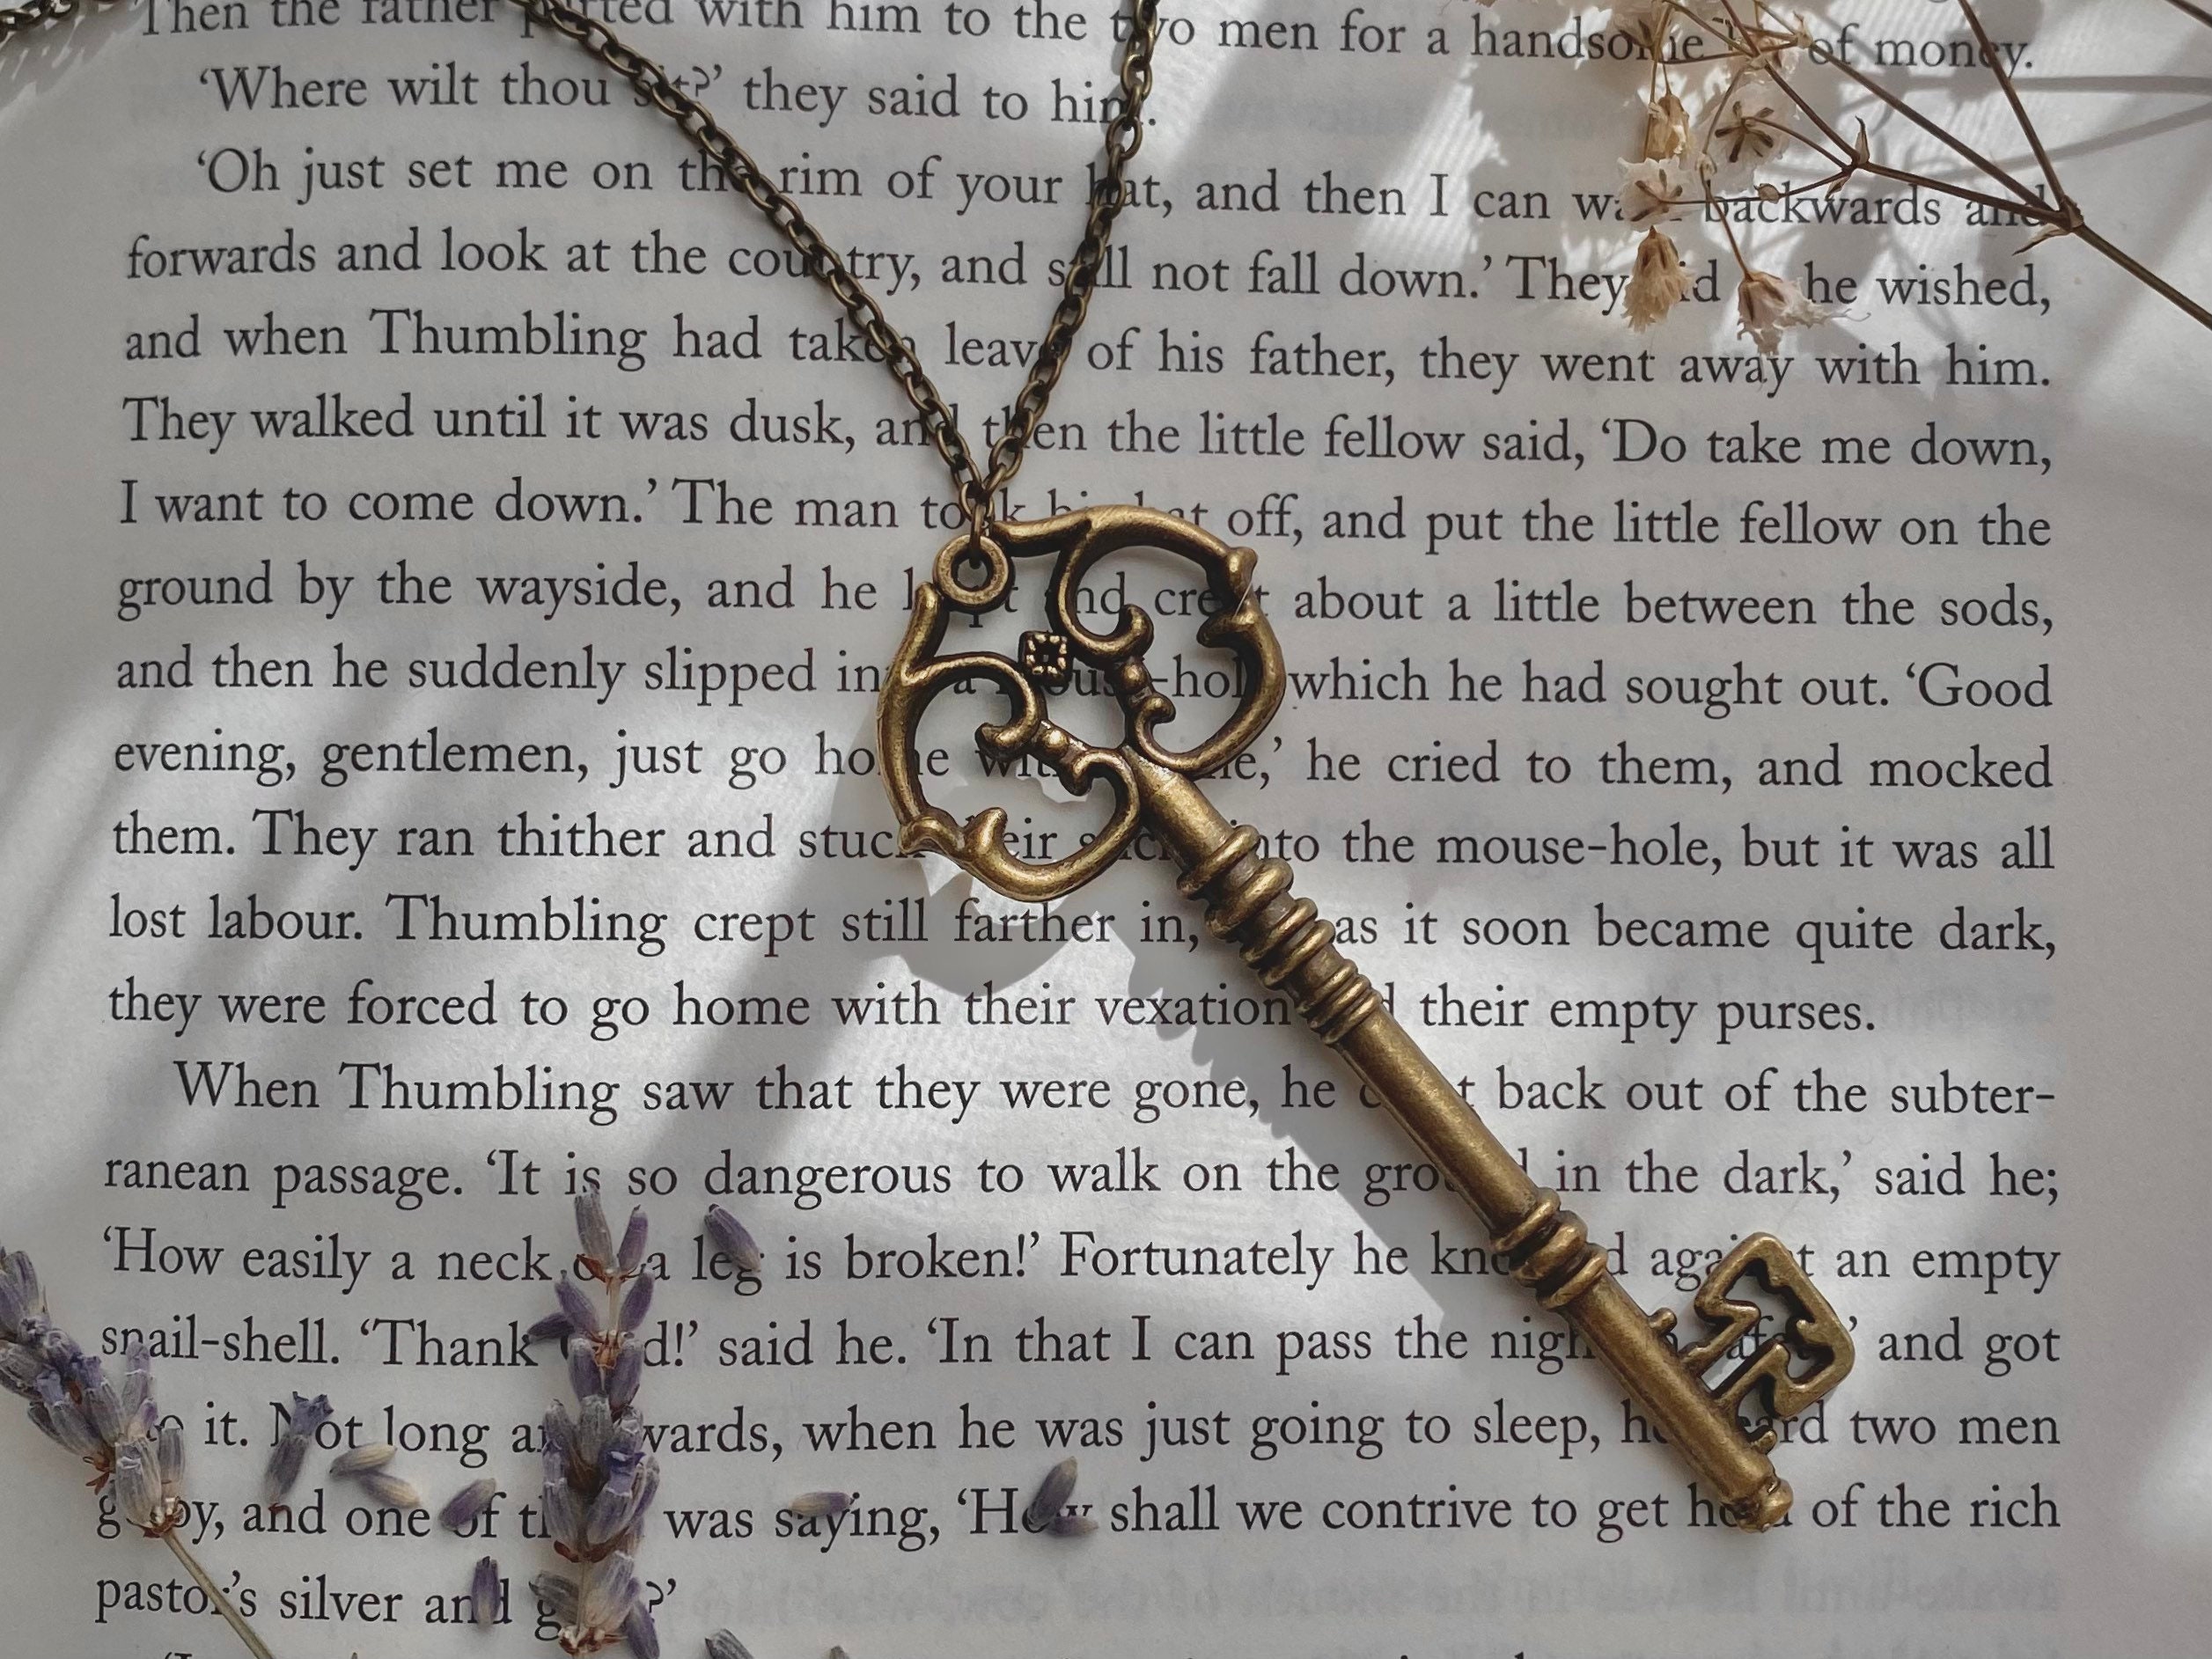 The Giving Keys Dark Bronze Key Necklace